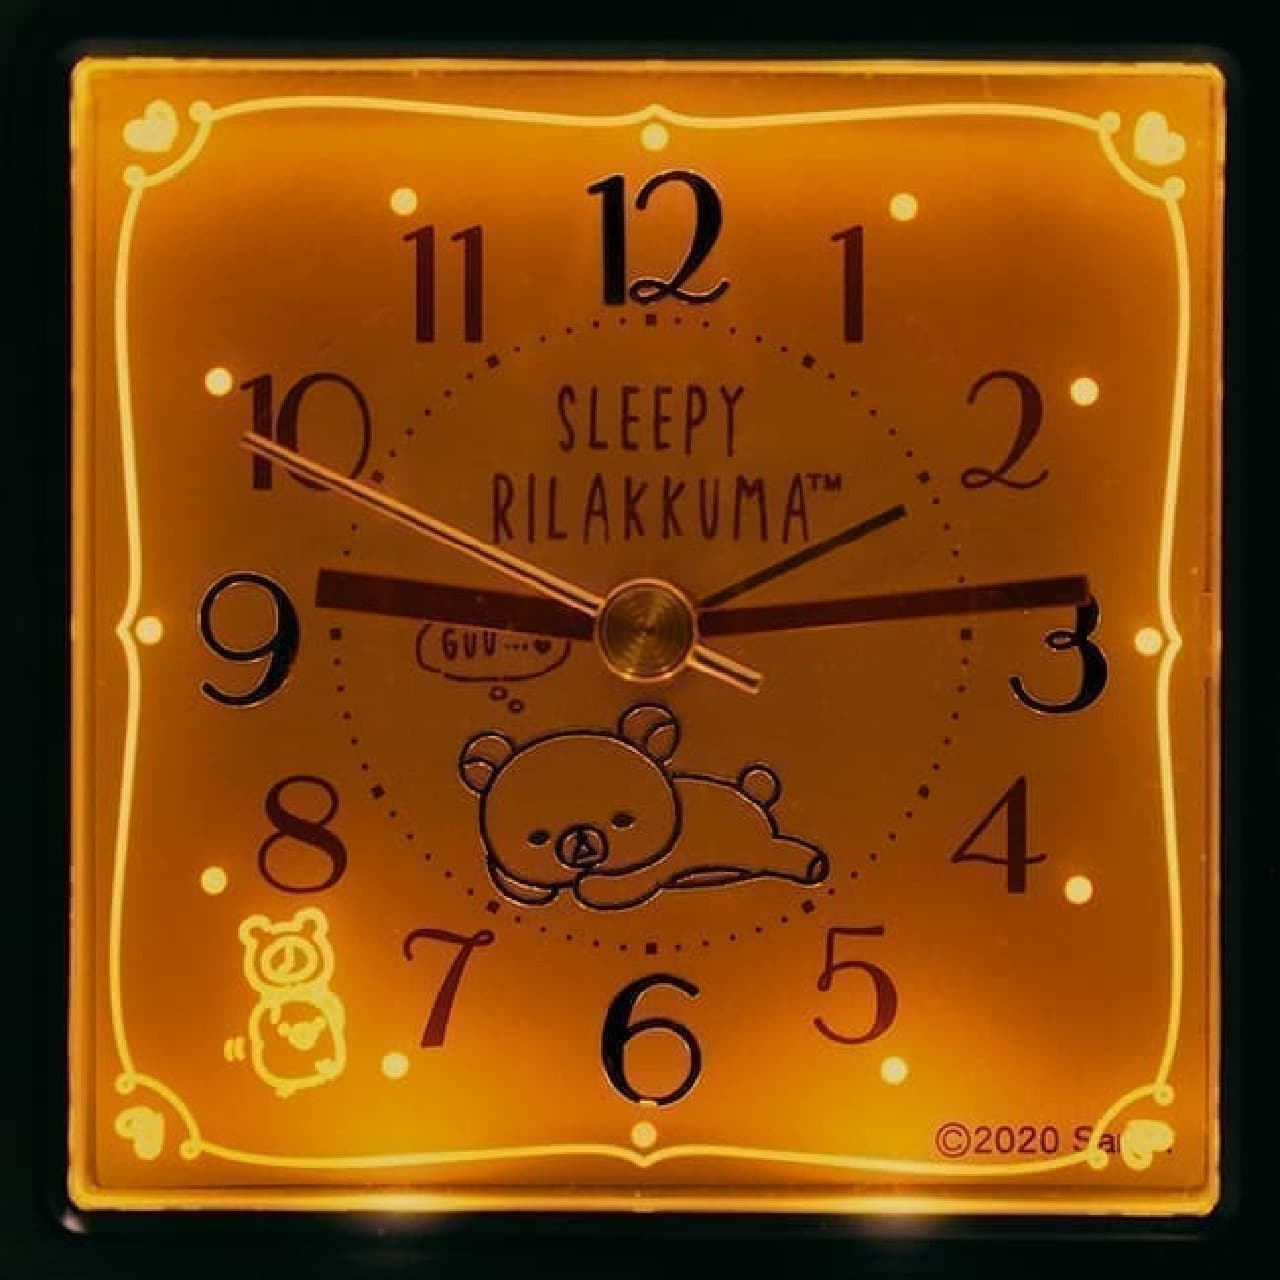 From Seiko Clock, the new alarm clock "CQ161P" designed by Rilakkuma